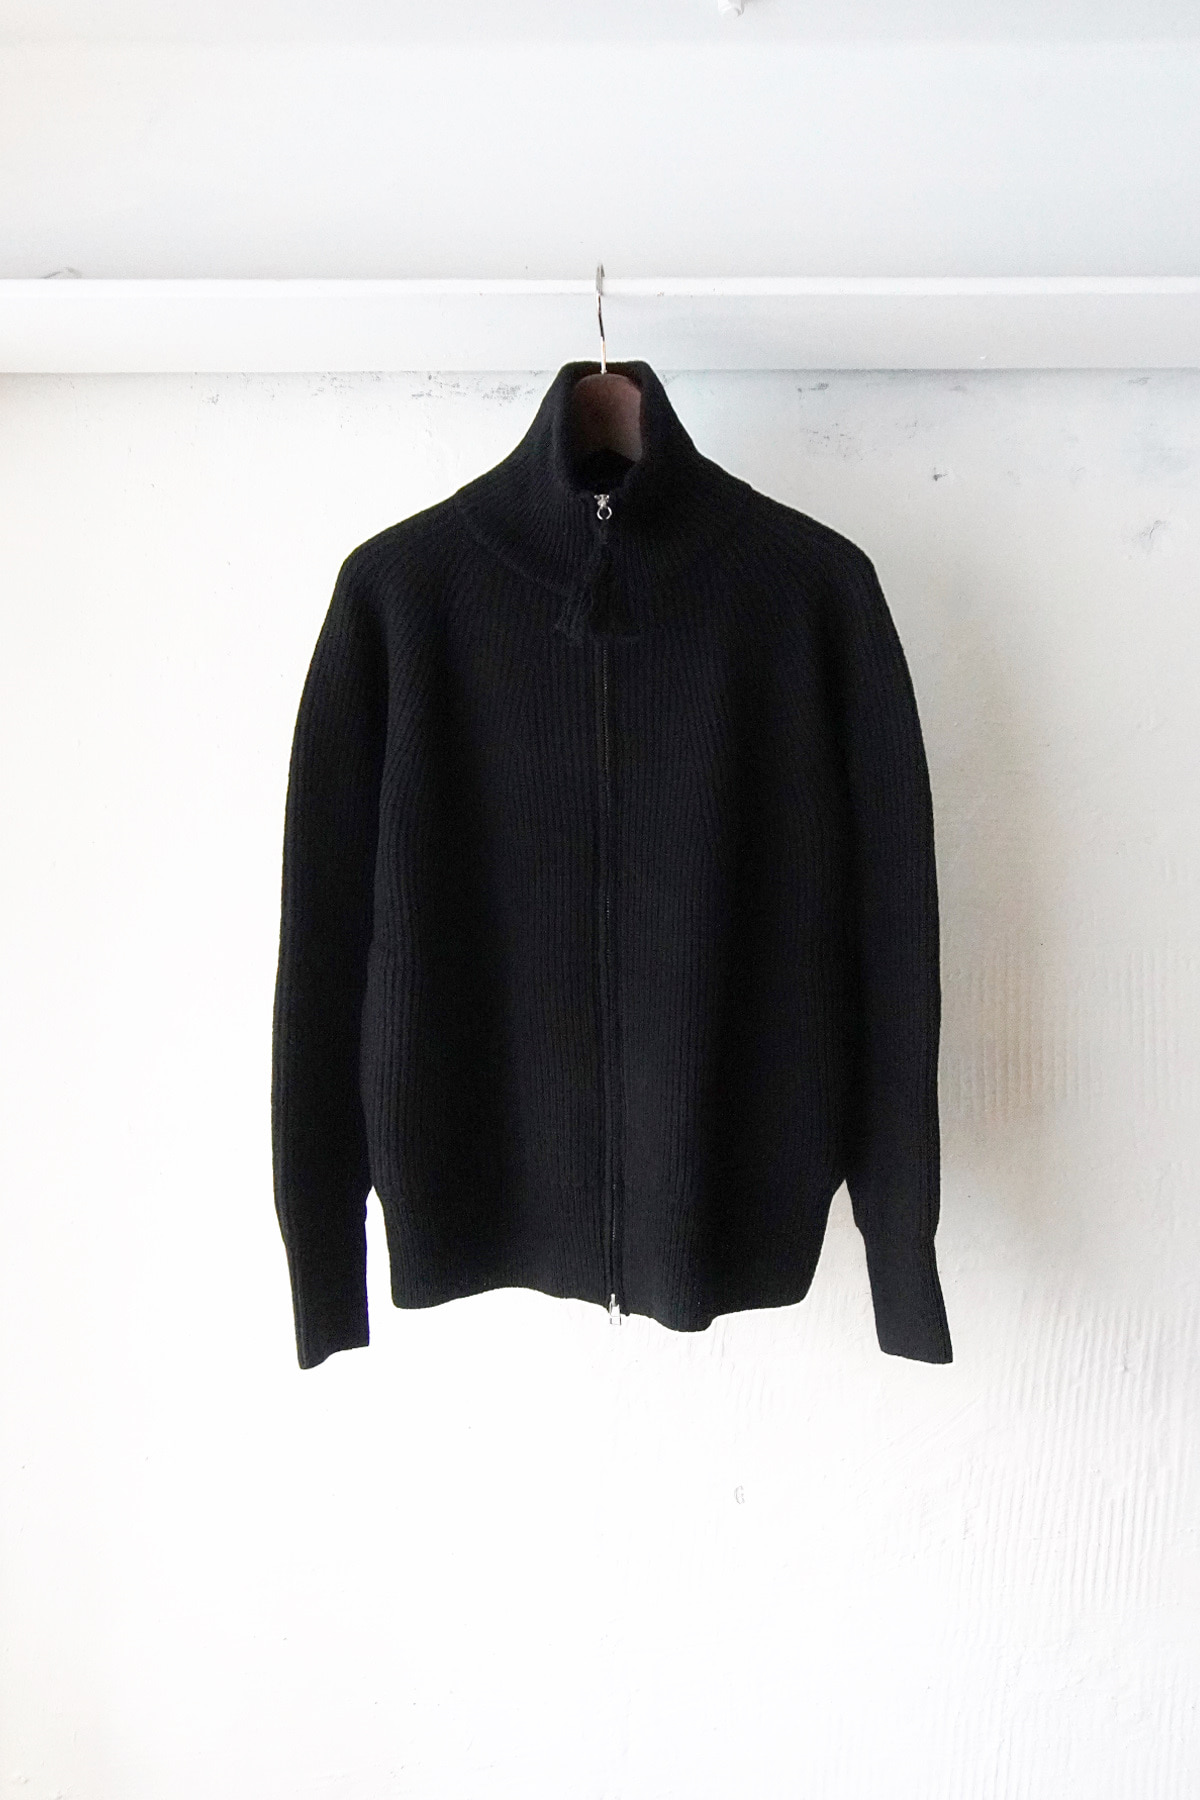 [OLD JOE BRAND] Tweedy Yarn Zip Sweater - Black